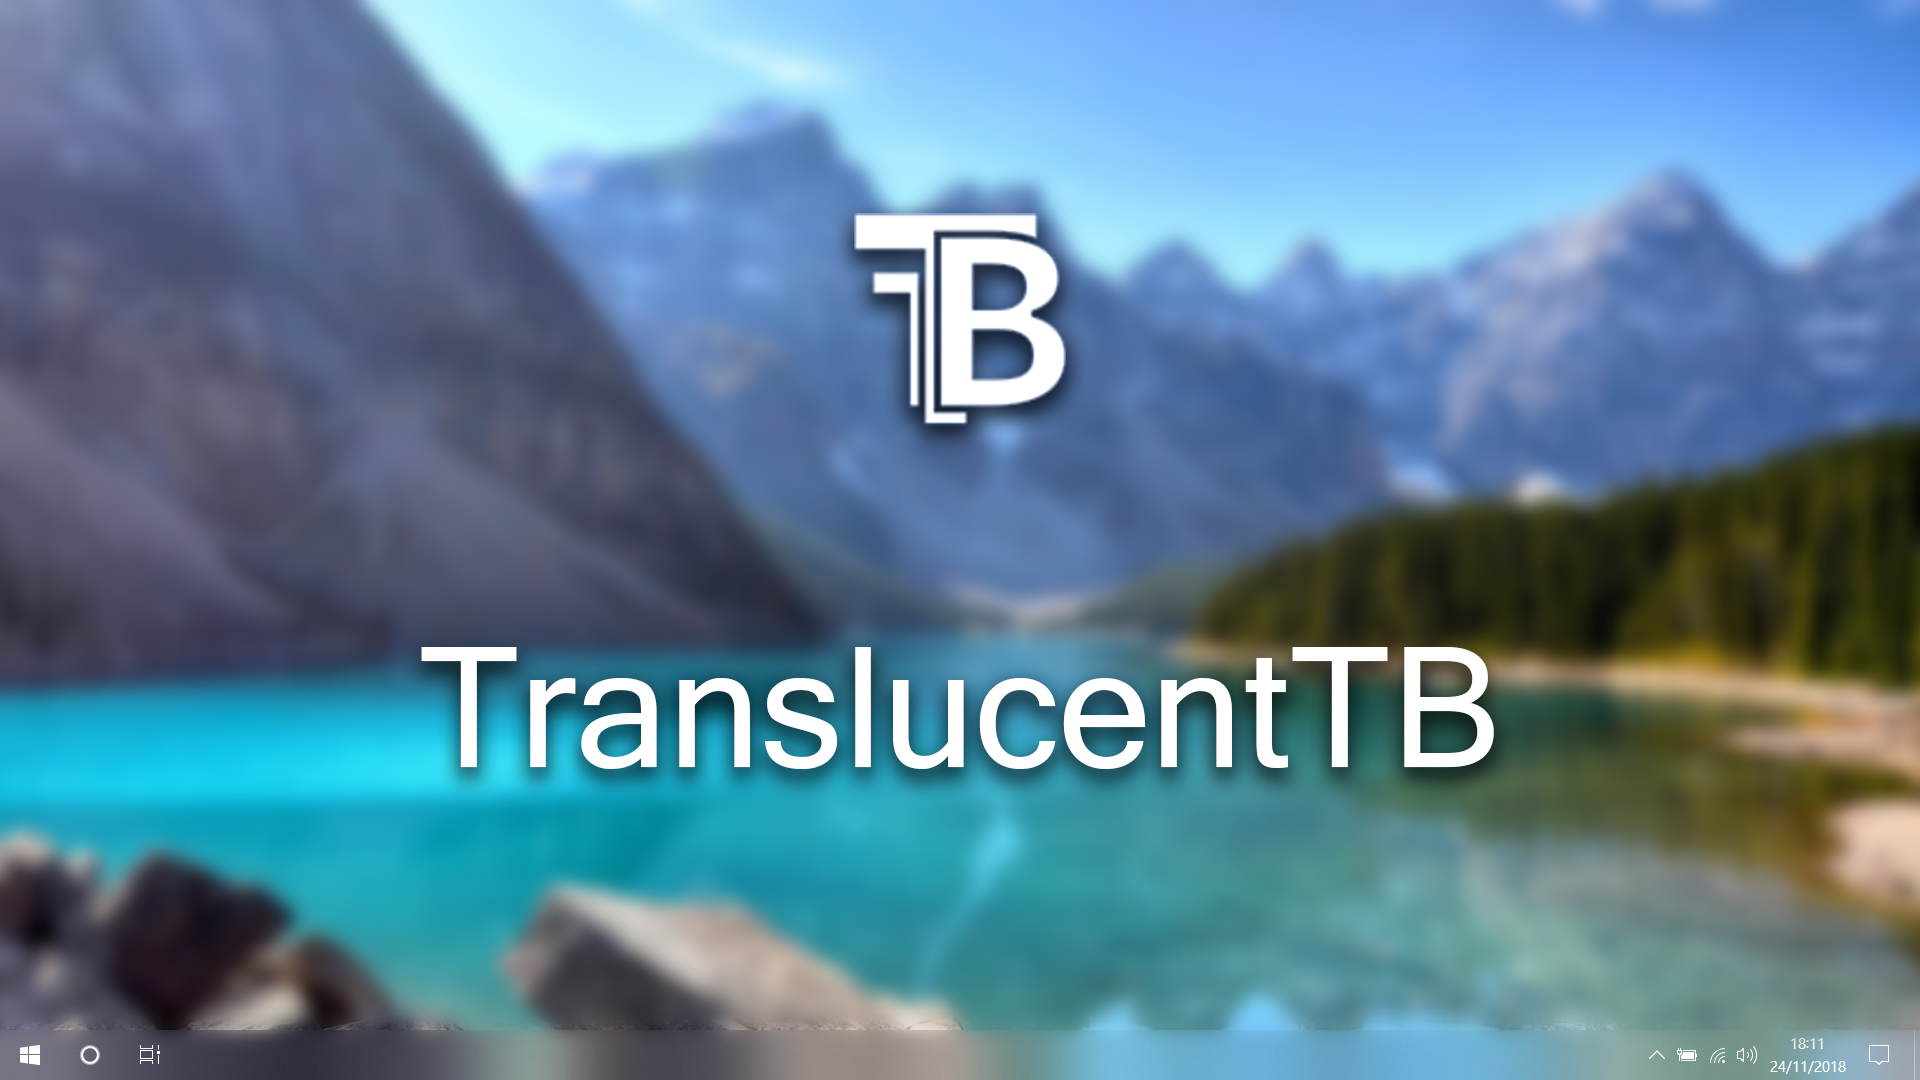 TranslucentTB: Modifica la transparencia de la barra de tareas de Windows 10